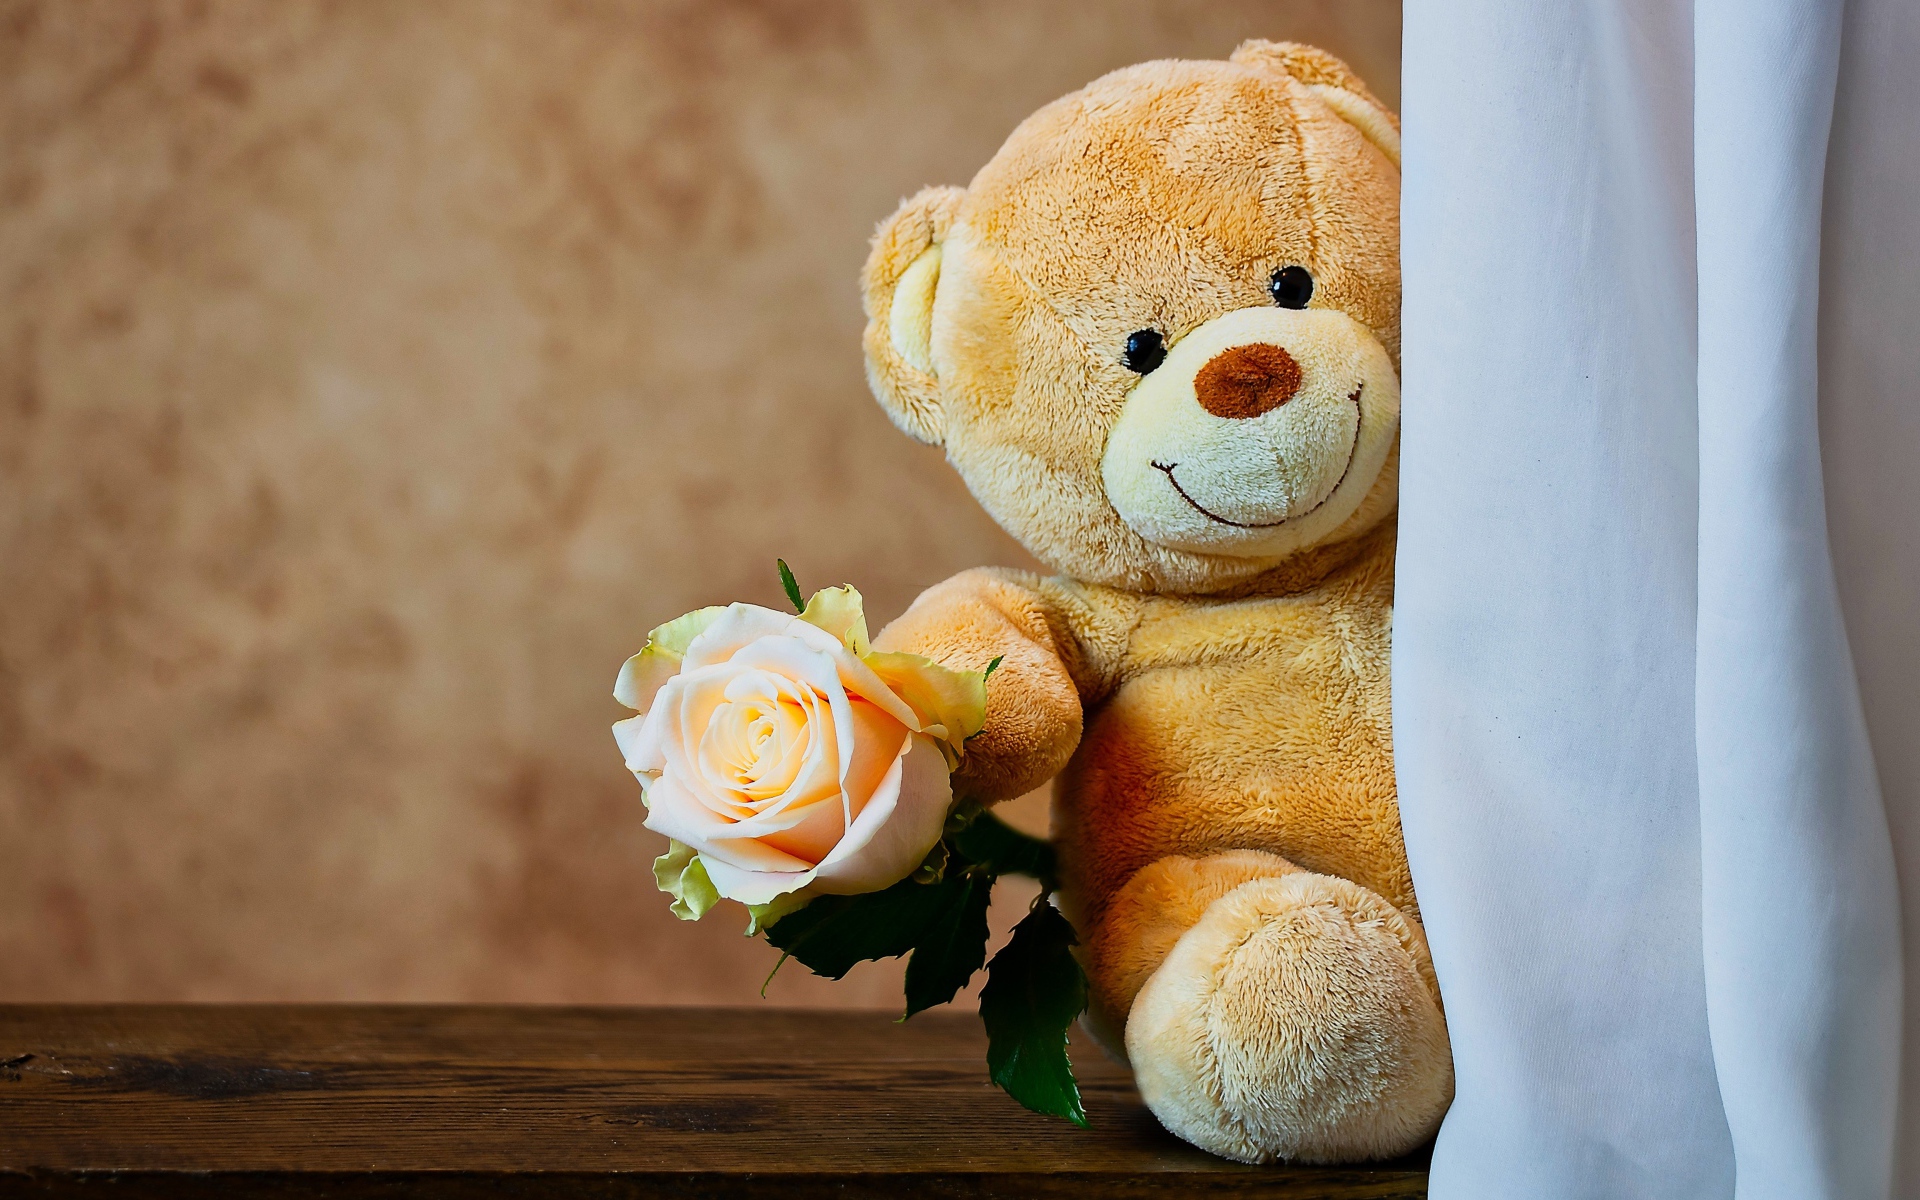 Teddy Bear with a rose behind the curtain